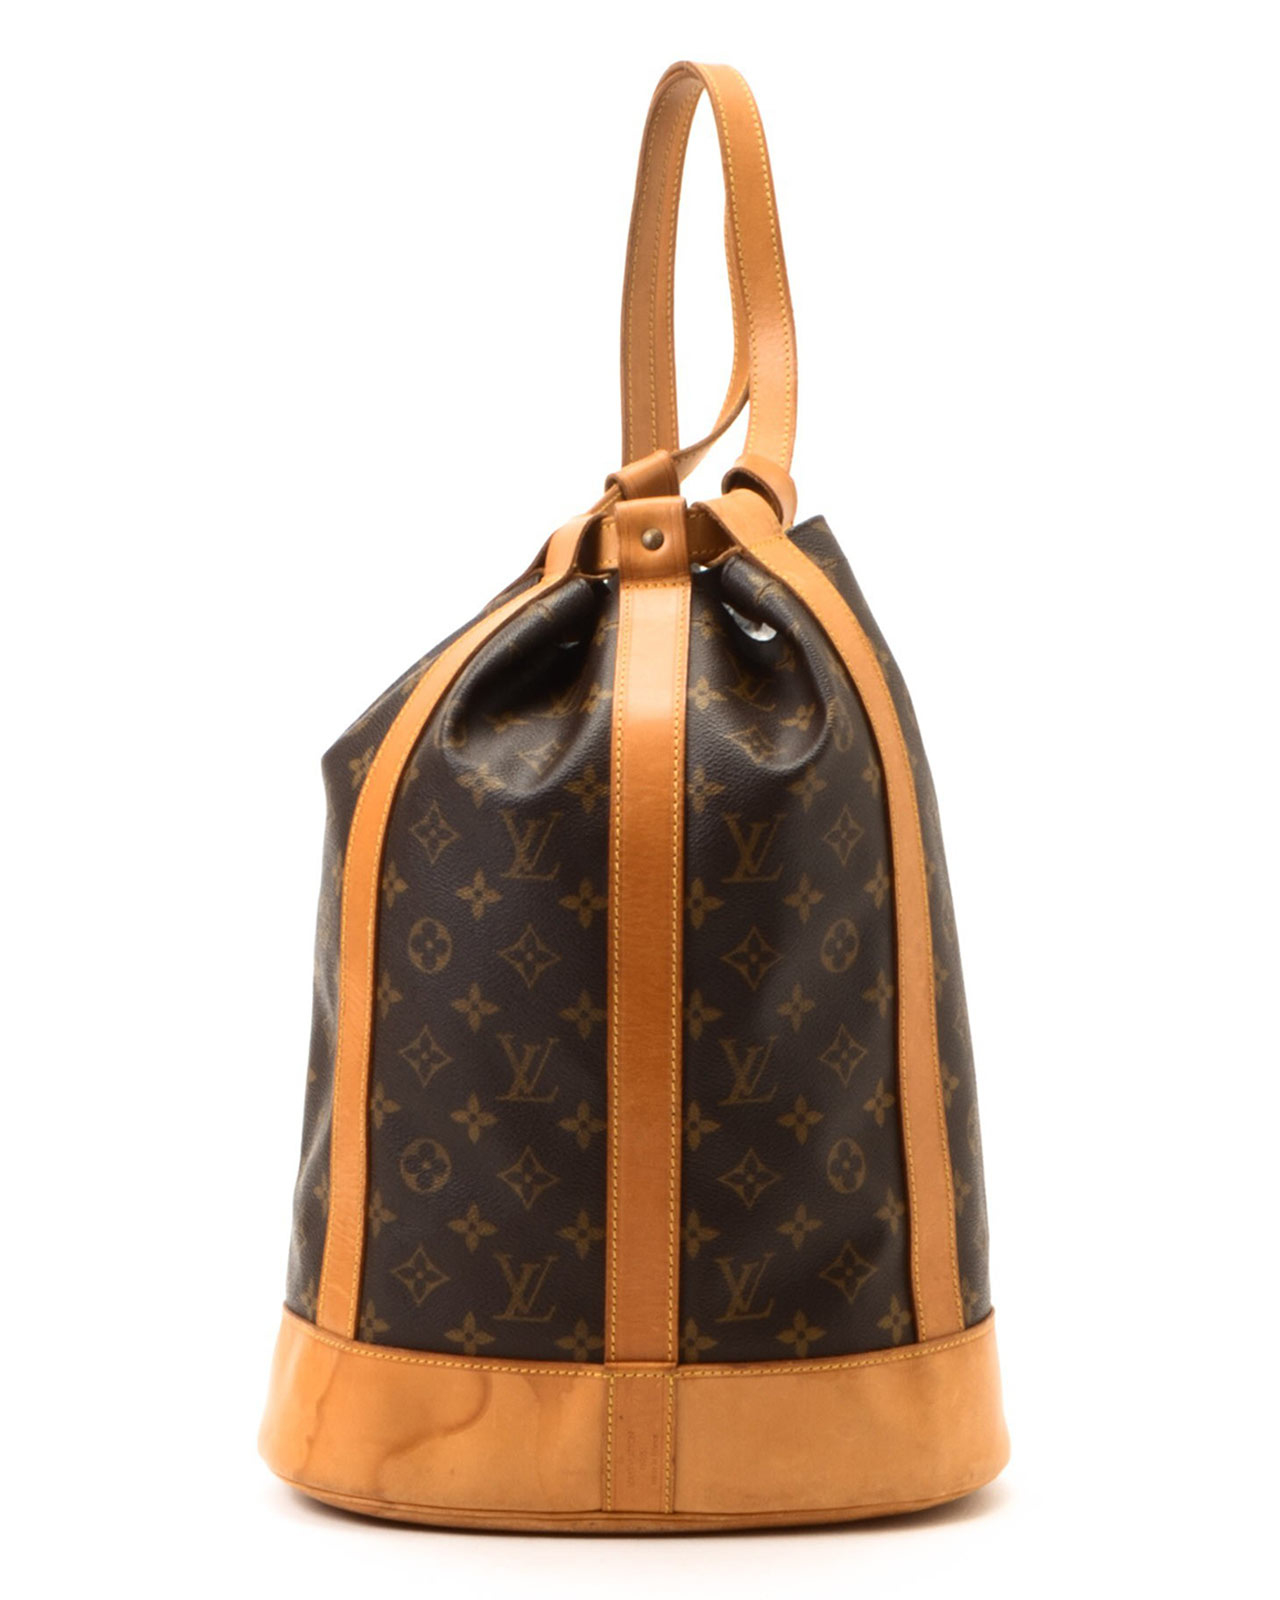 Lyst - Louis Vuitton Randonnee Pm Backpack in Brown